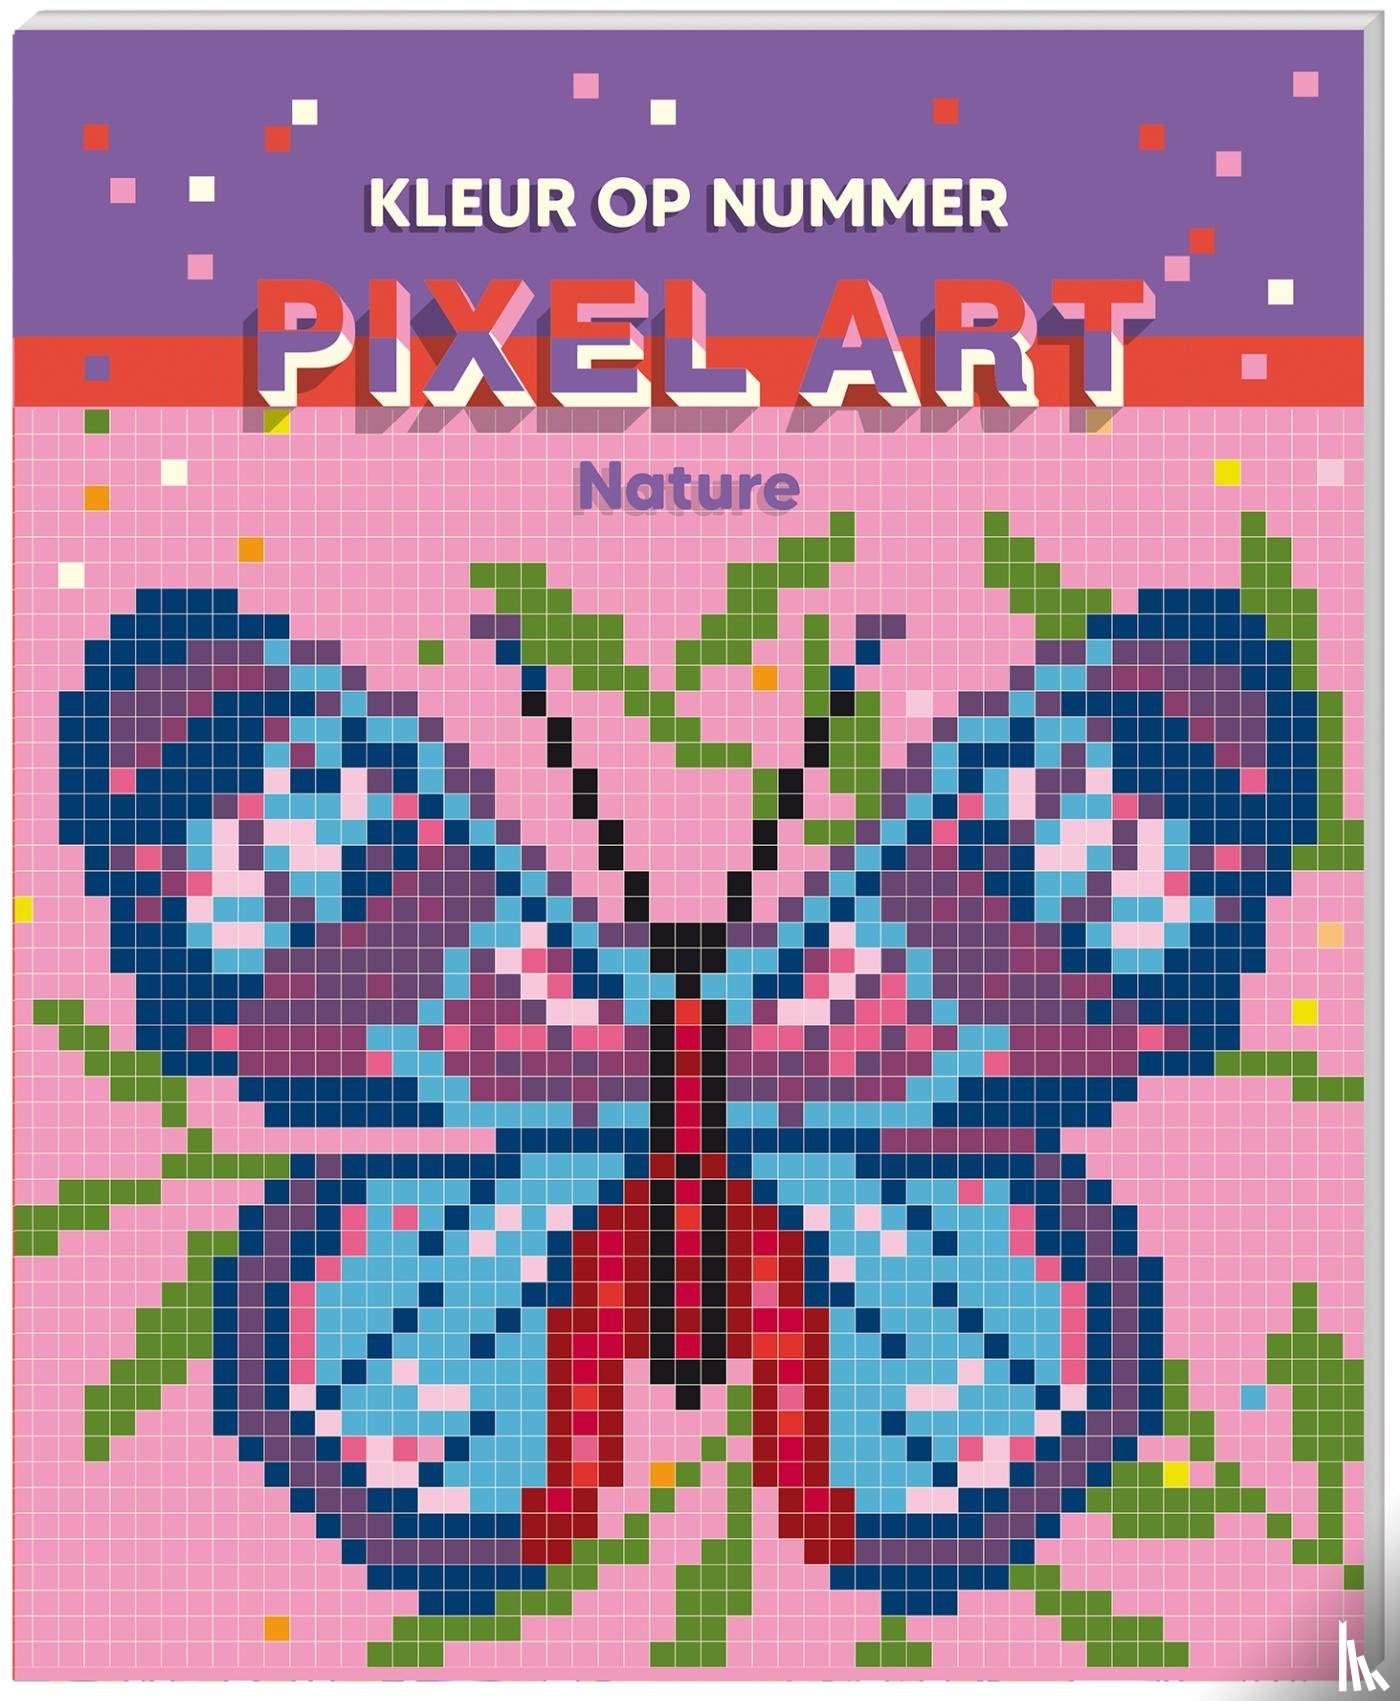 Interstat - Kleuren op nummer - Pixel art - Nature